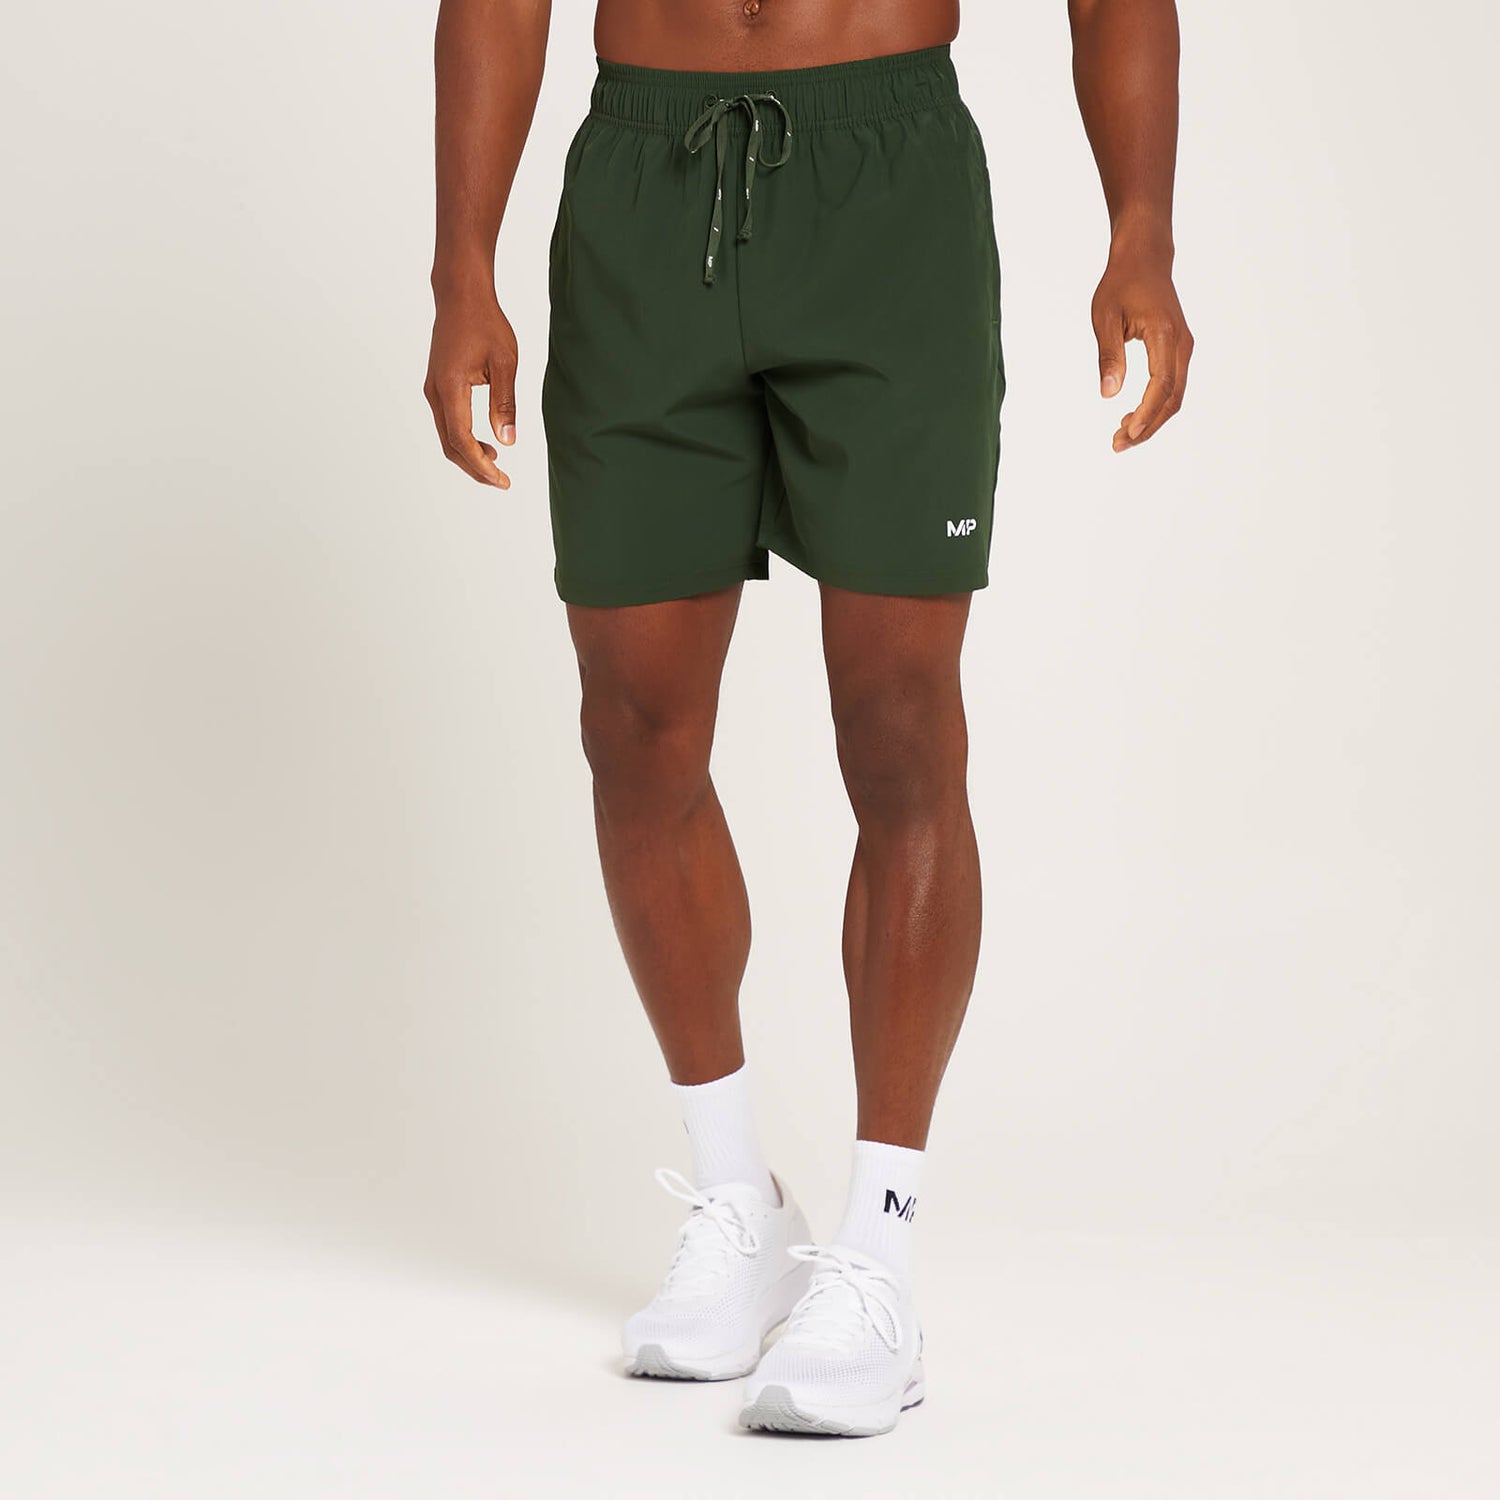 MP Men's Linear Mark Graphic Training Shorts - Dark Green - XS